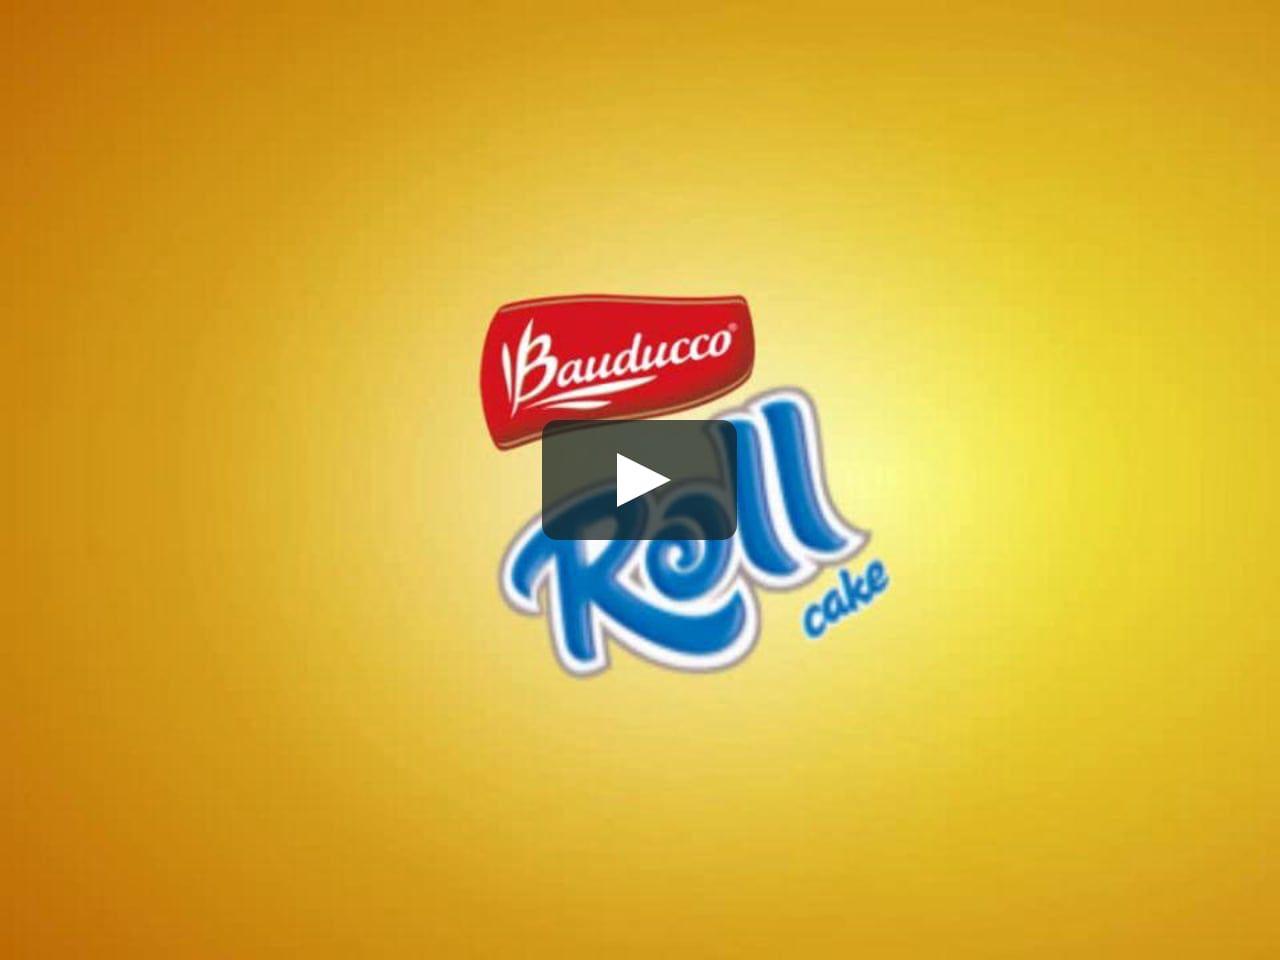 Bauducco Logo - Roll Cake Bauducco on Vimeo